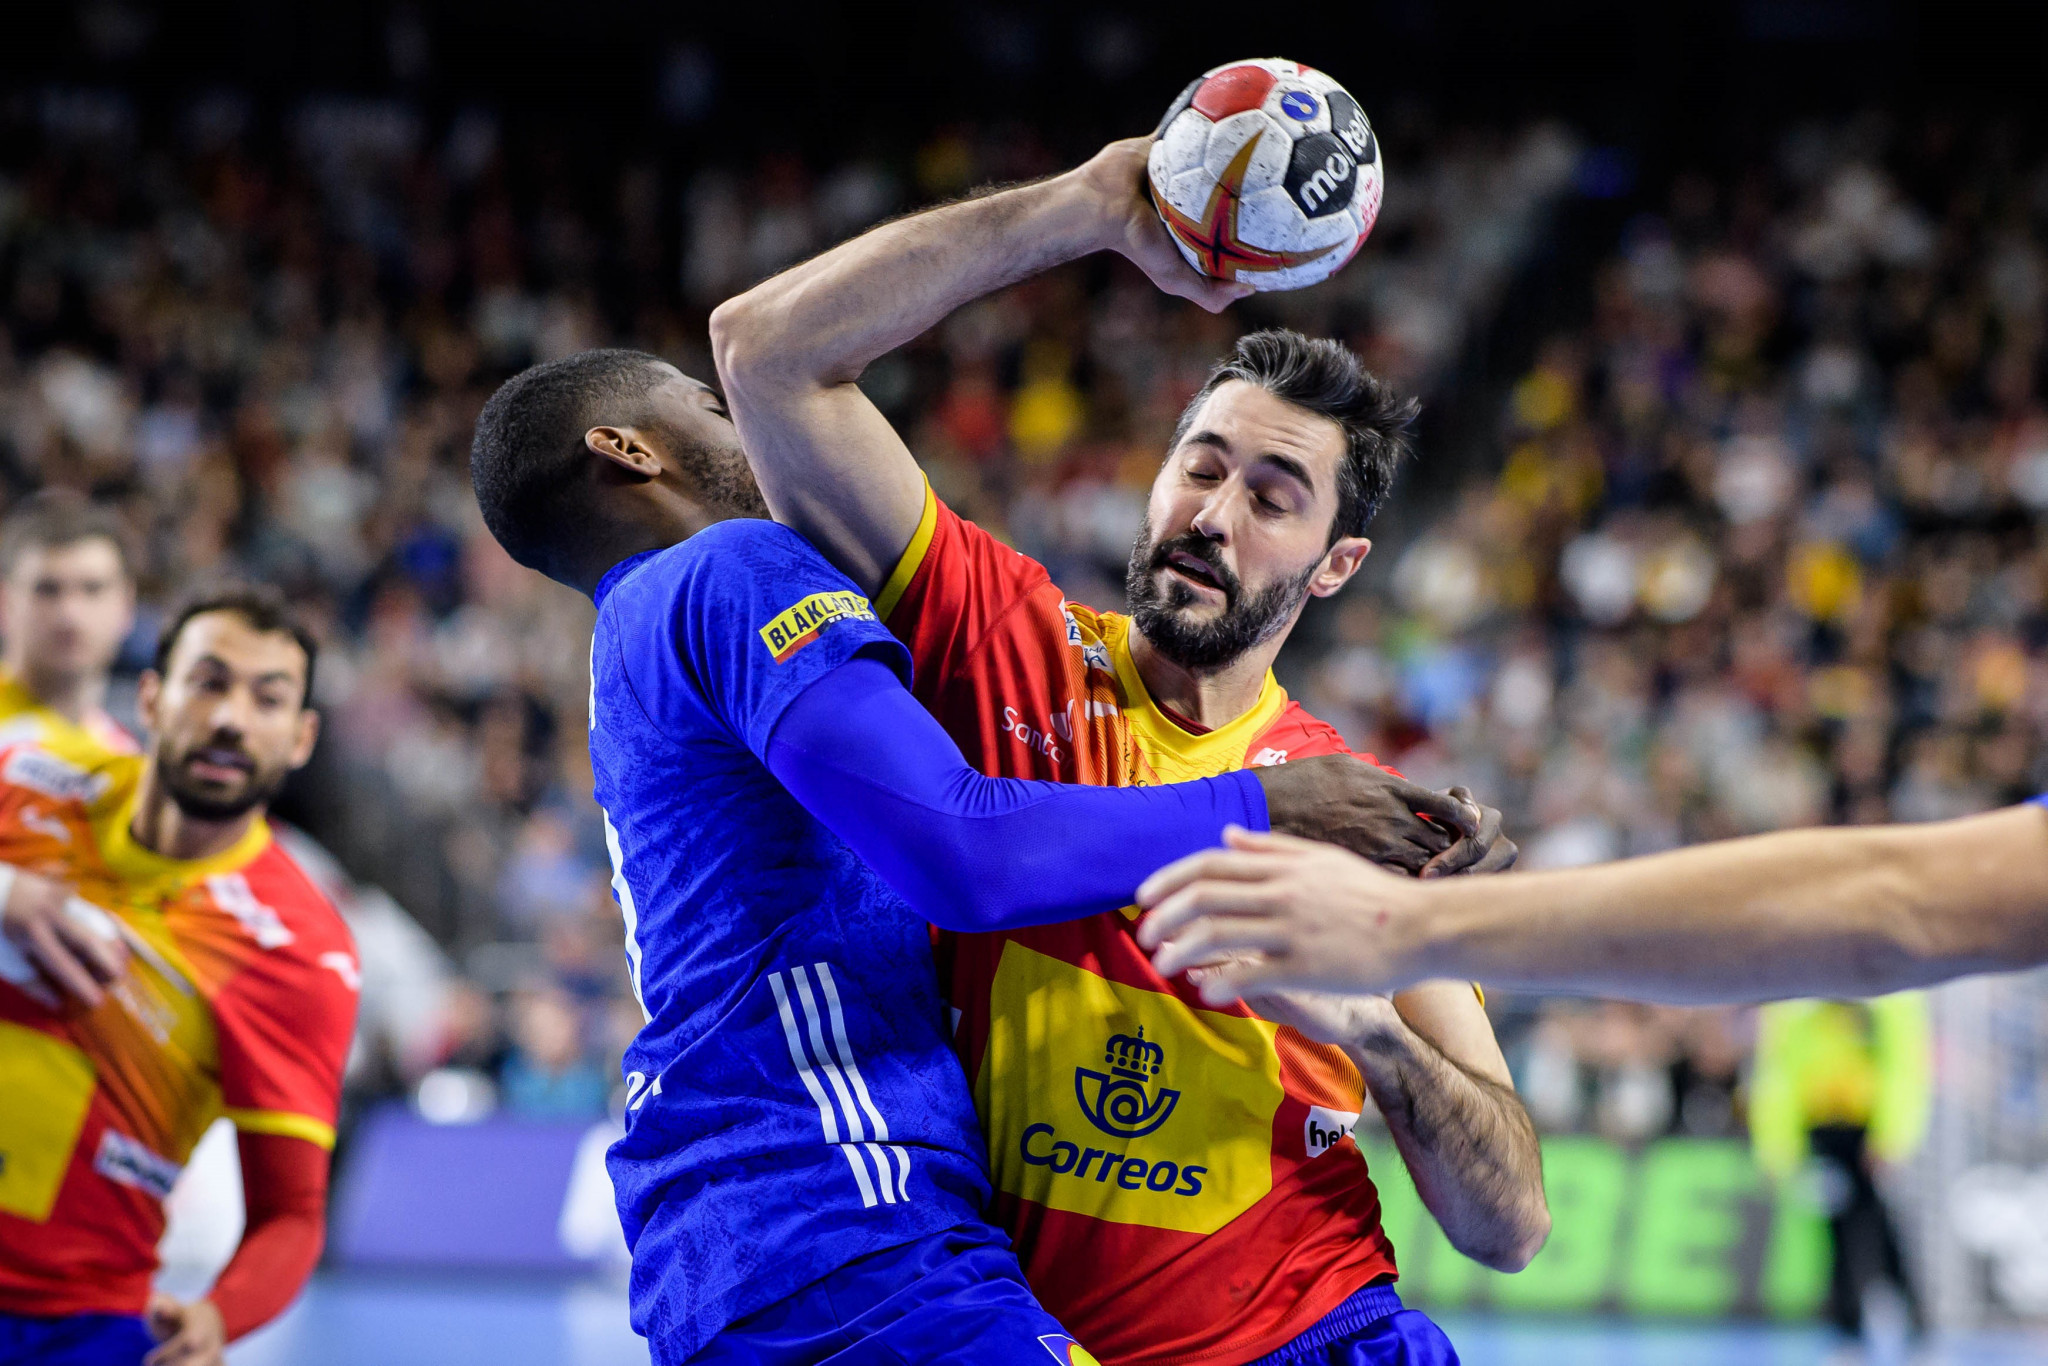 Spain eyeing third straight European Men’s Handball Championship crown